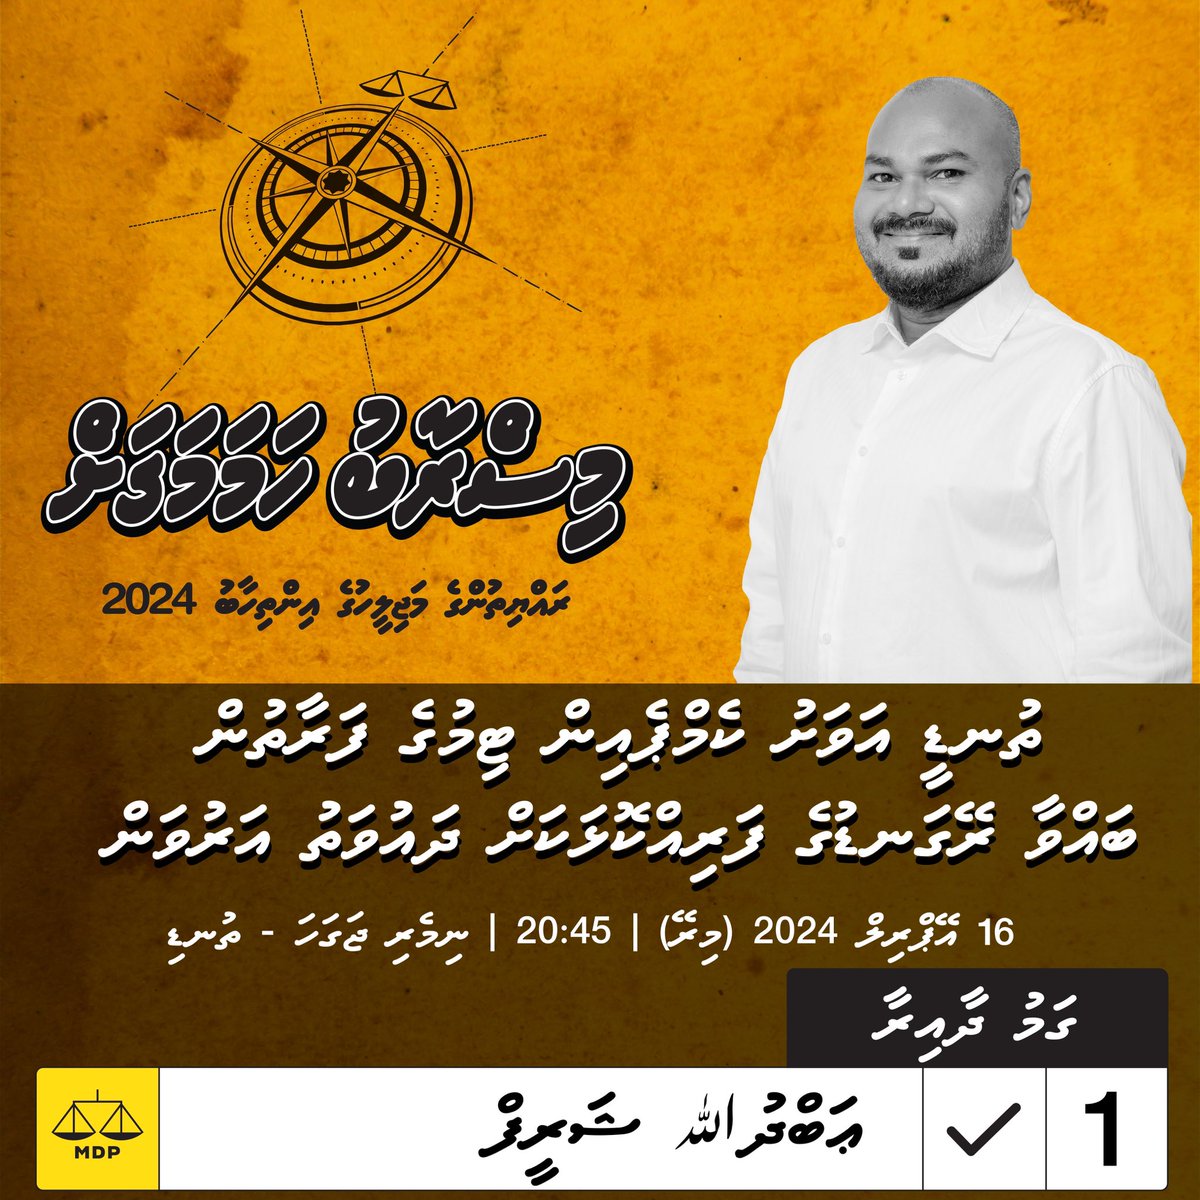 💛ދައުވަތު ⏰​މިރޭ 08:45 ގައި 📍ނިމެރި ޖަގަހަ - ތުނޑި #AB2024 #MisraabuHamaMagah #GamuDhaairaa #Majlis20